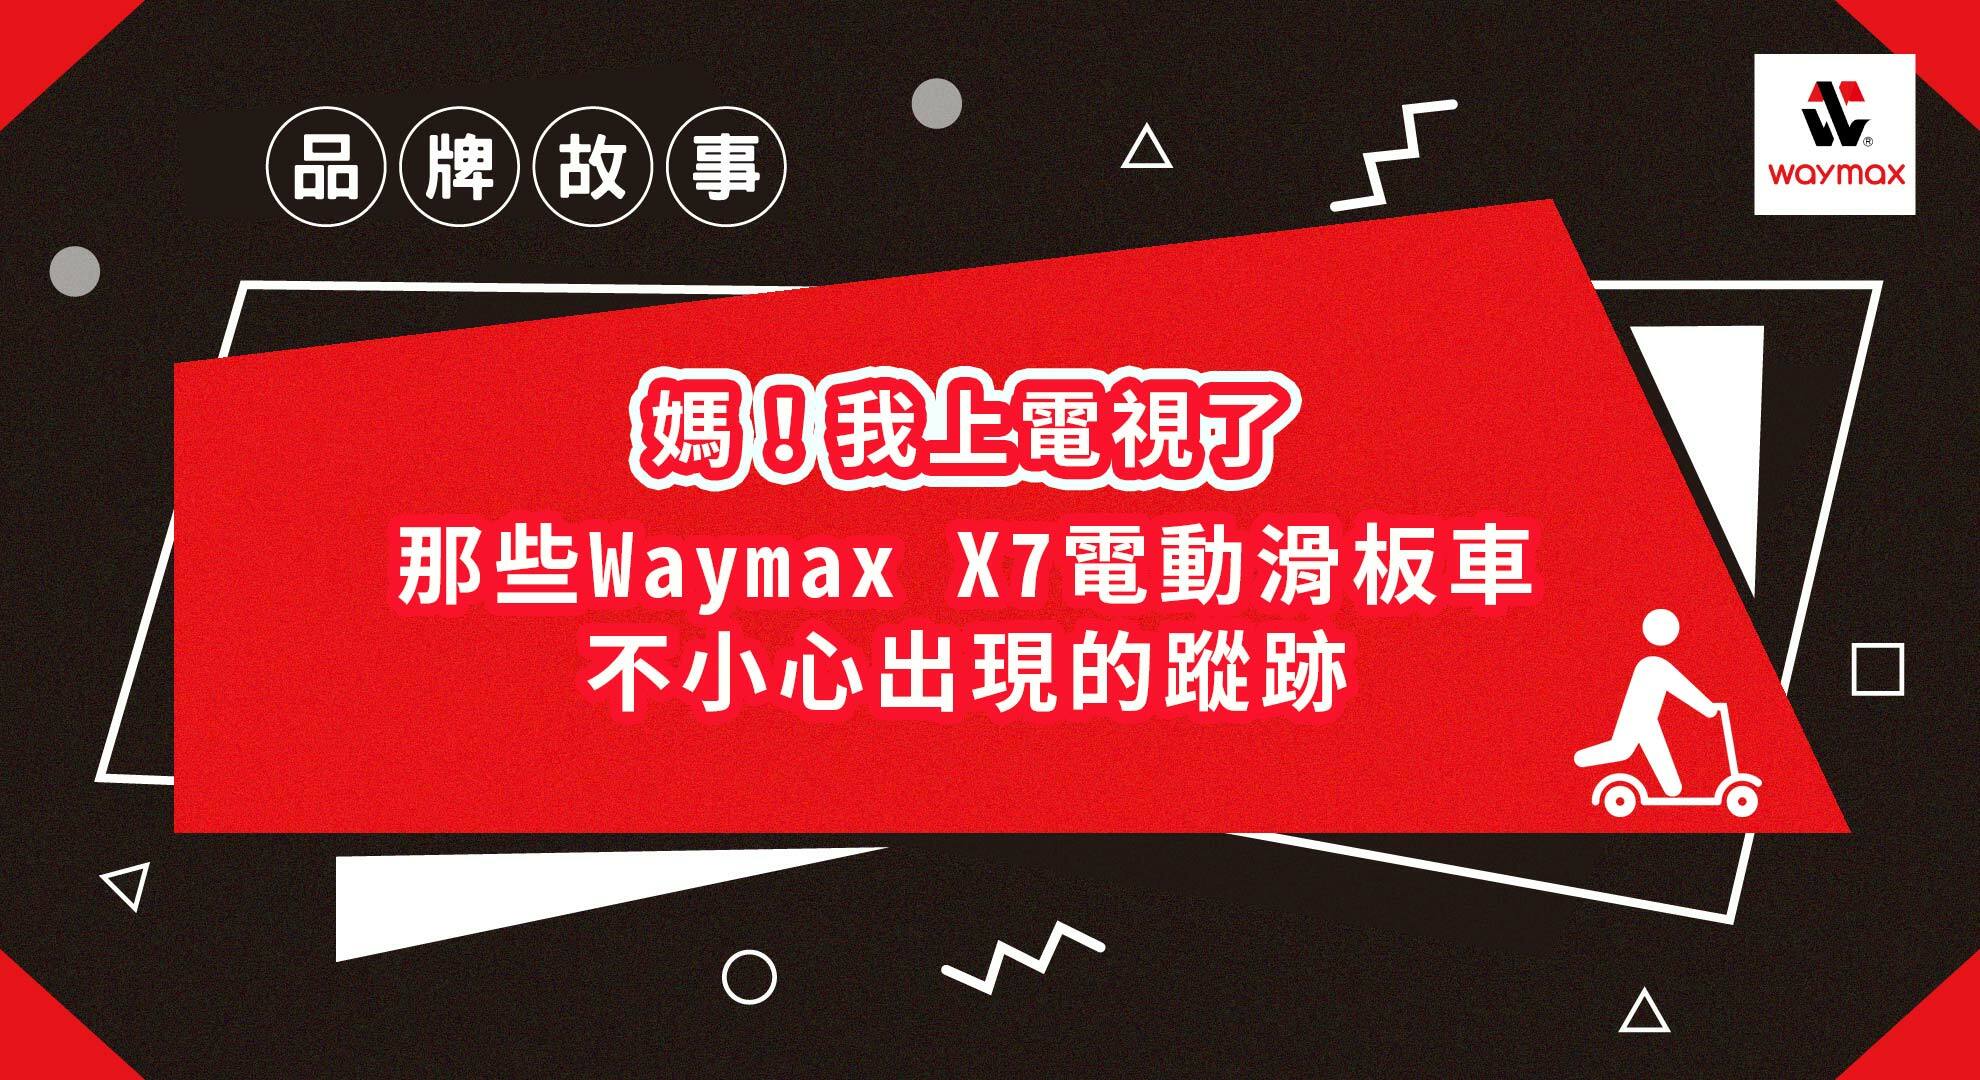 Waymax品牌故事 媽我上電視了 Waymax X7電動滑板車出現的小蹤跡